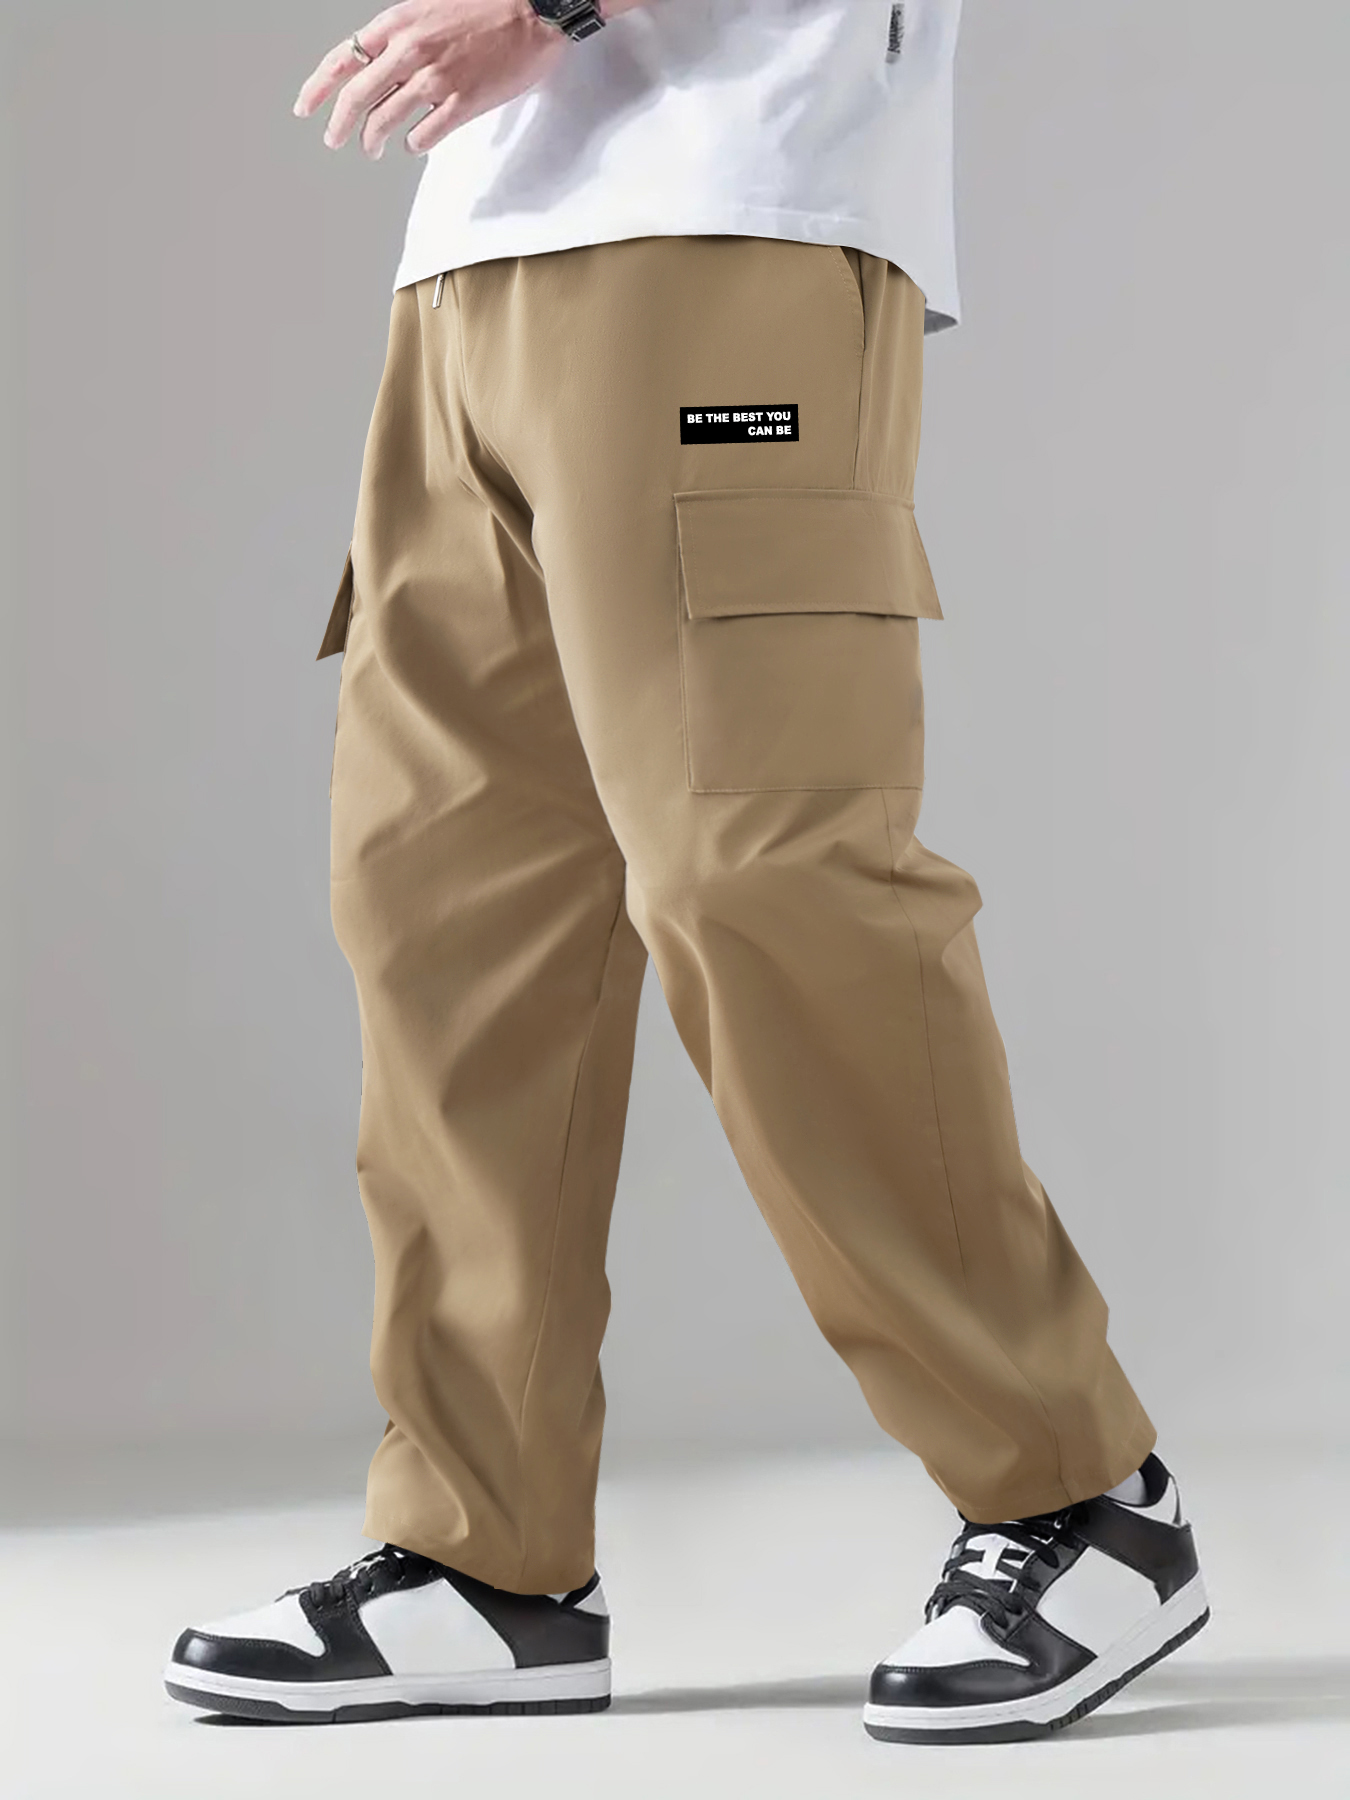 Manfinity LEGND Men's Plus Size Cashew Print Cargo Pants